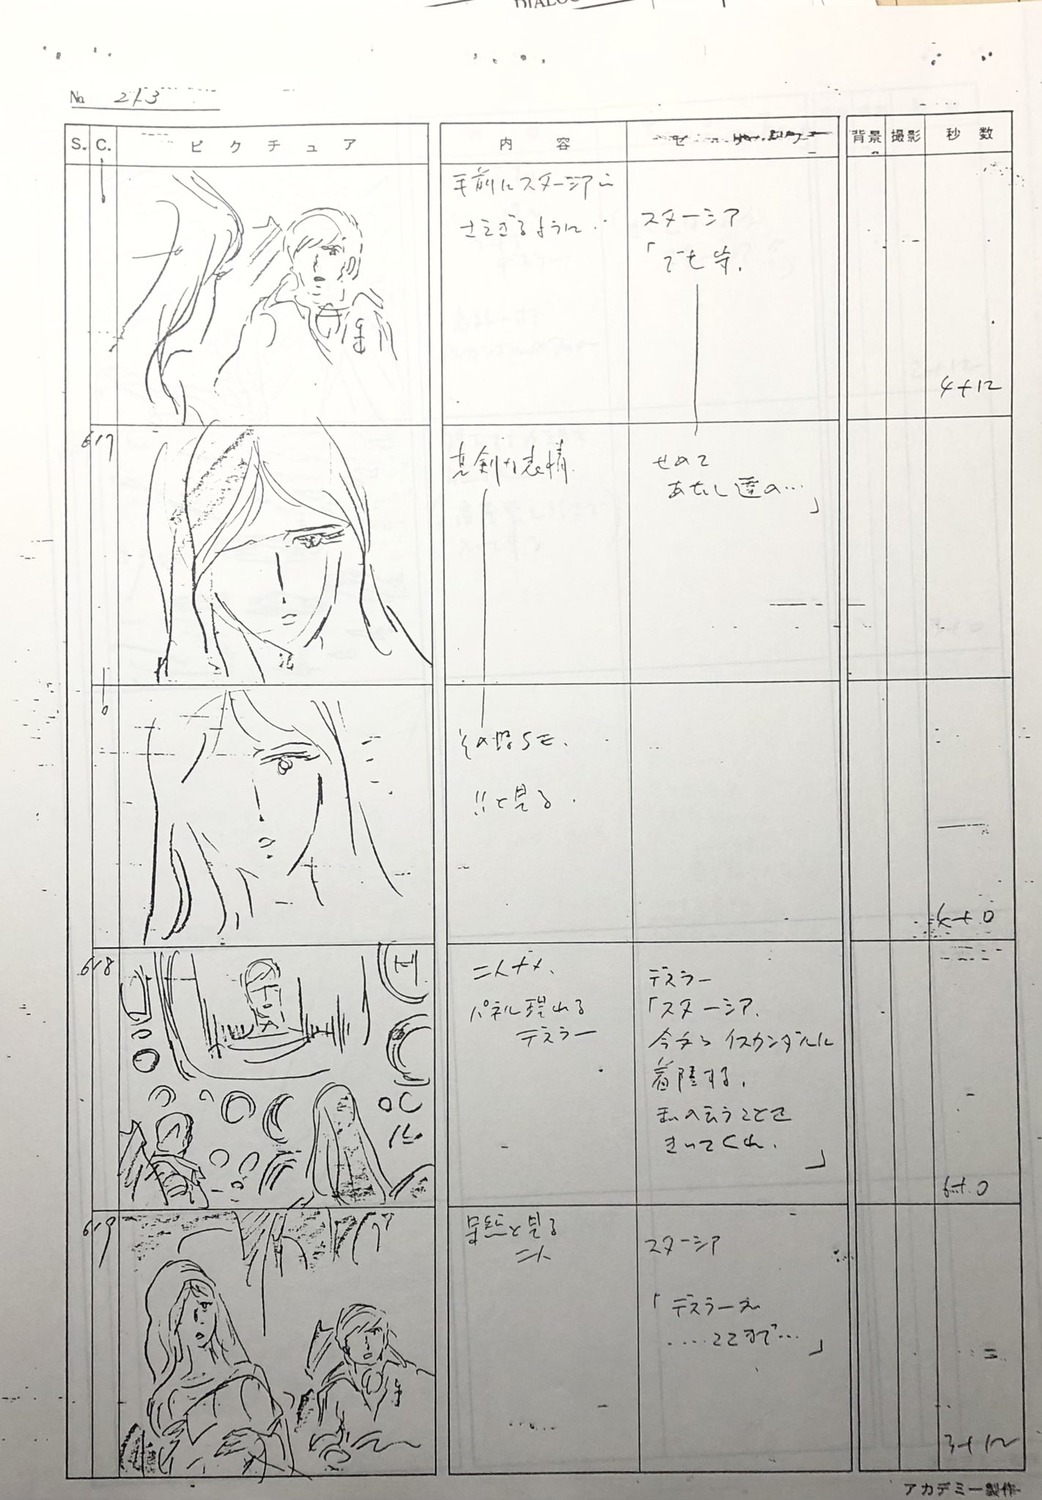 production_materials storyboard yamato_aratanaru_tabidachi yamato_series yoshikazu_yasuhiko